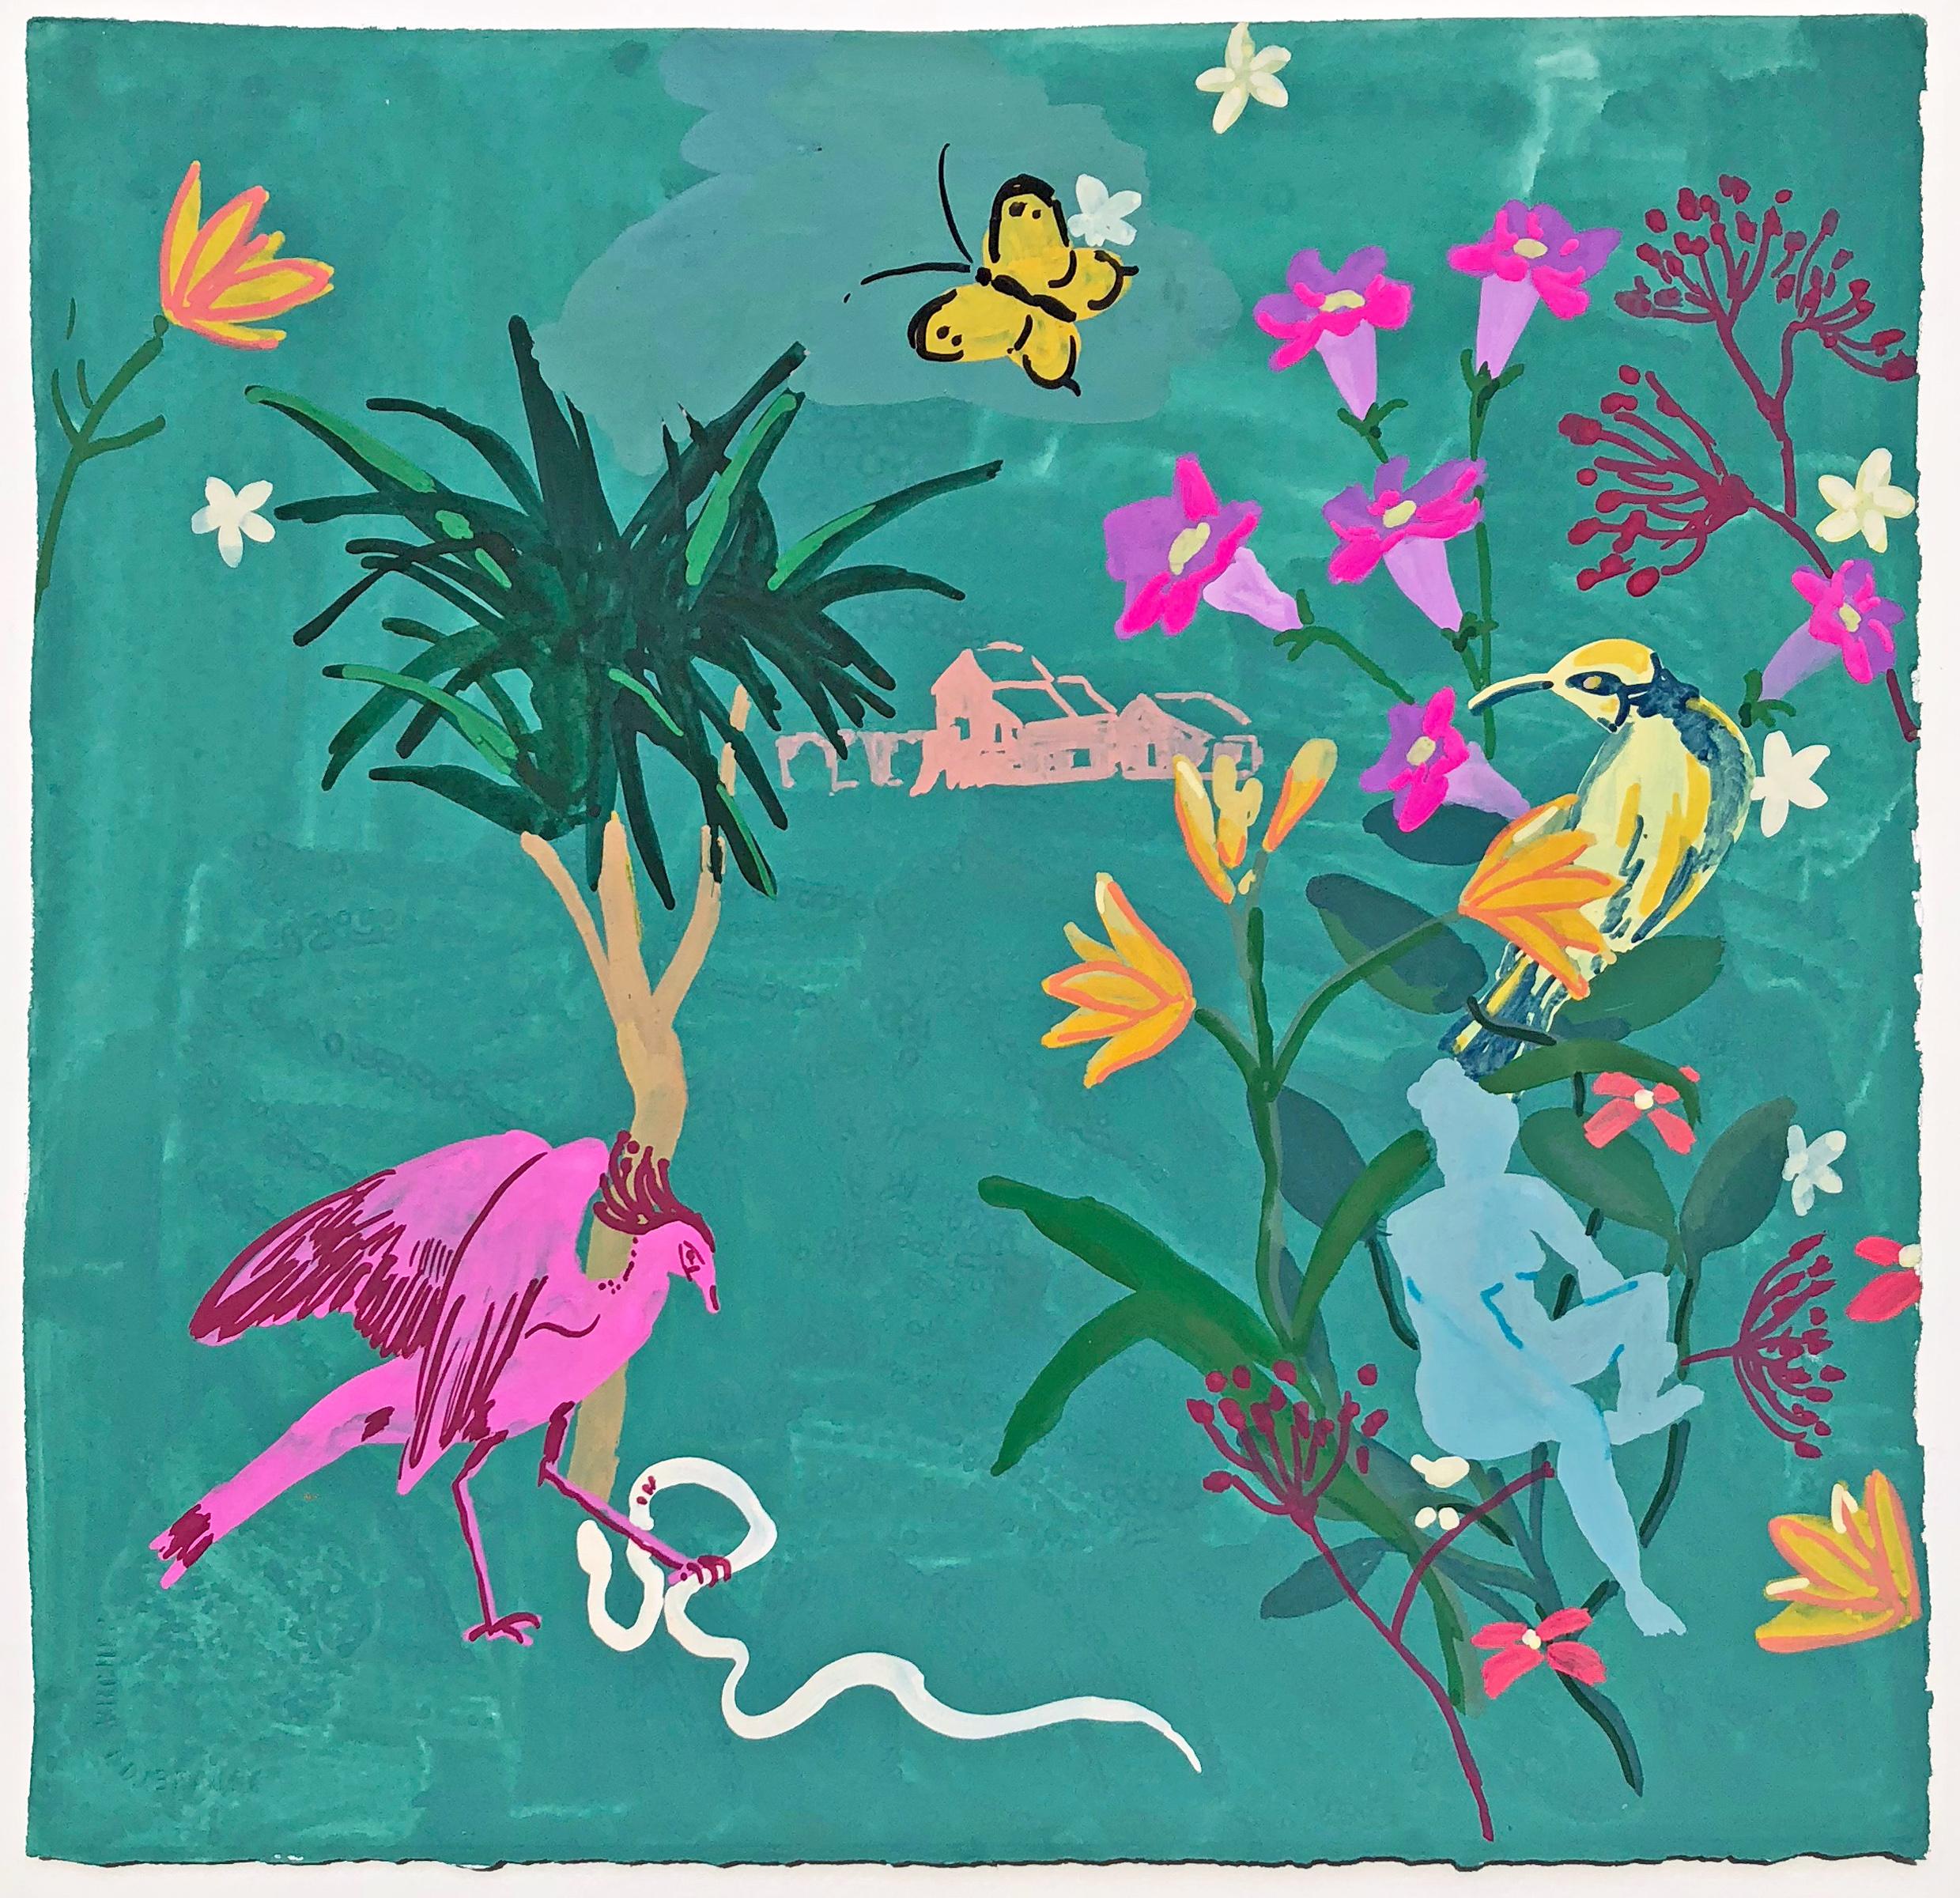 Melanie Parke Animal Art - Village Crane, vibrant gouache on paper genre scene